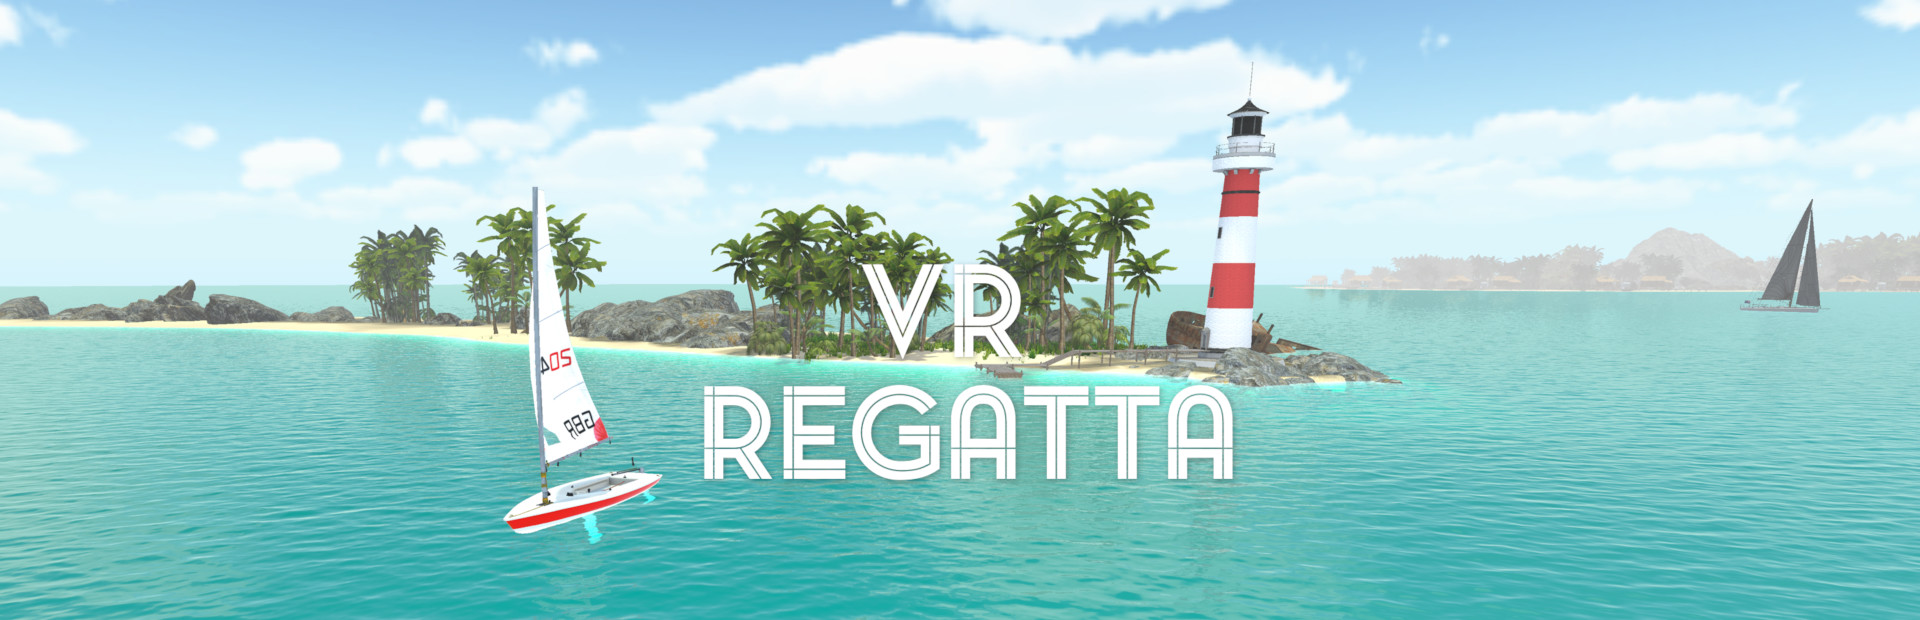 VR Regatta - The Sailing Game cover image